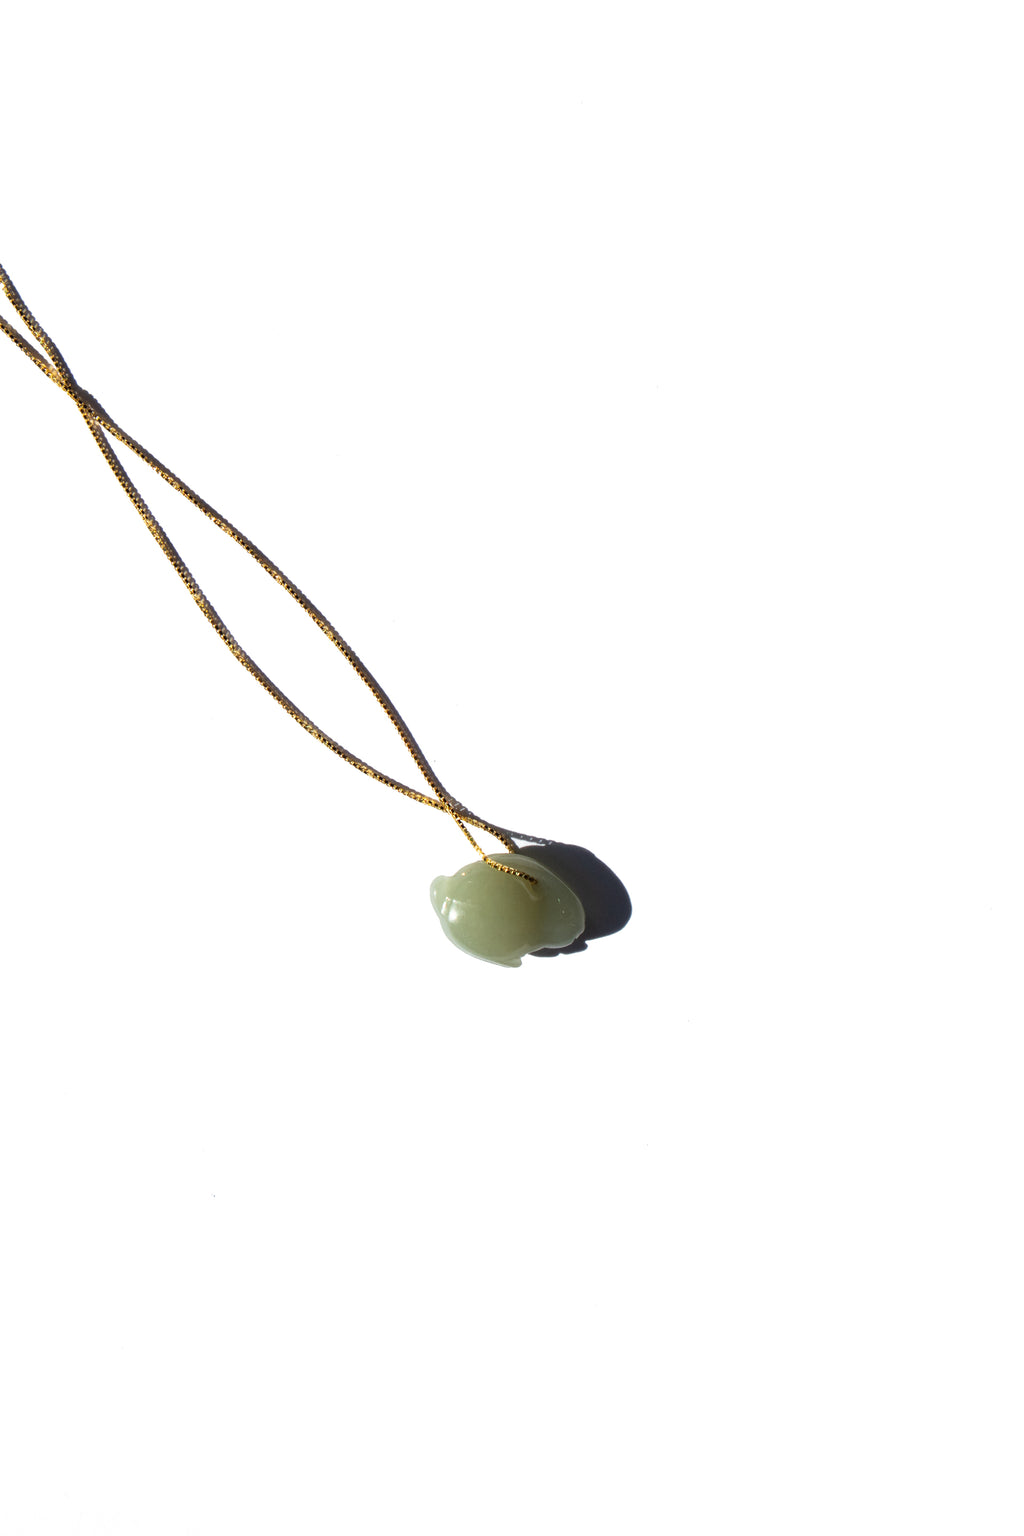 seree-rabbit-nephrite-jade-necklace-green-limited-edition